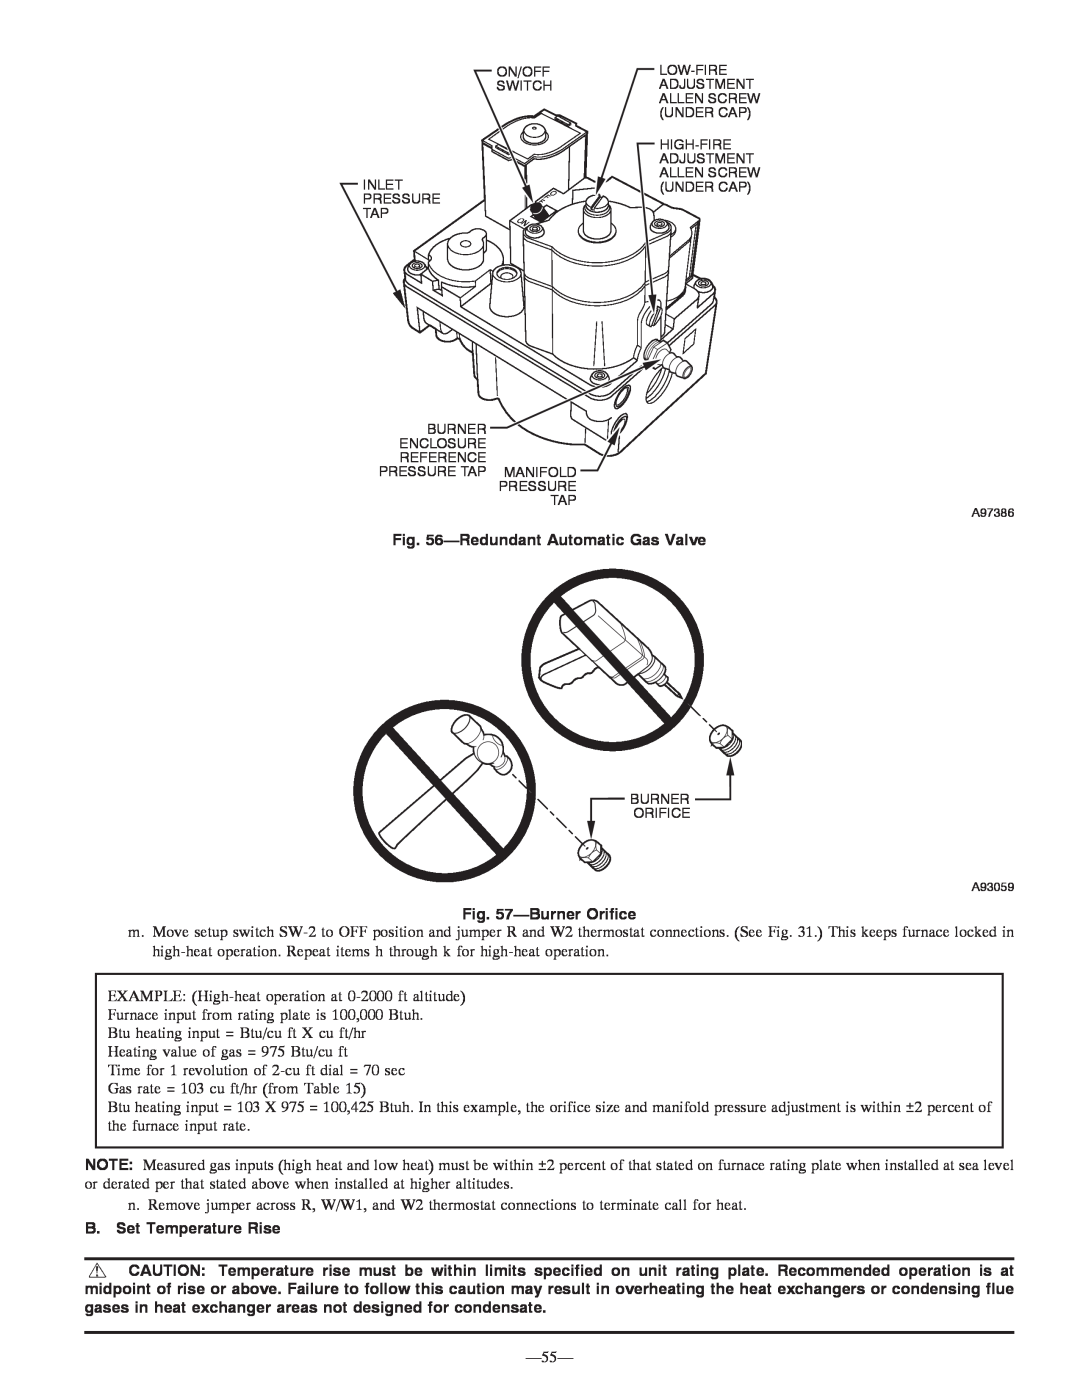 Bryant 355MAV instruction manual RedundantAutomatic Gas Valve, BurnerOrifice, B. Set Temperature Rise 